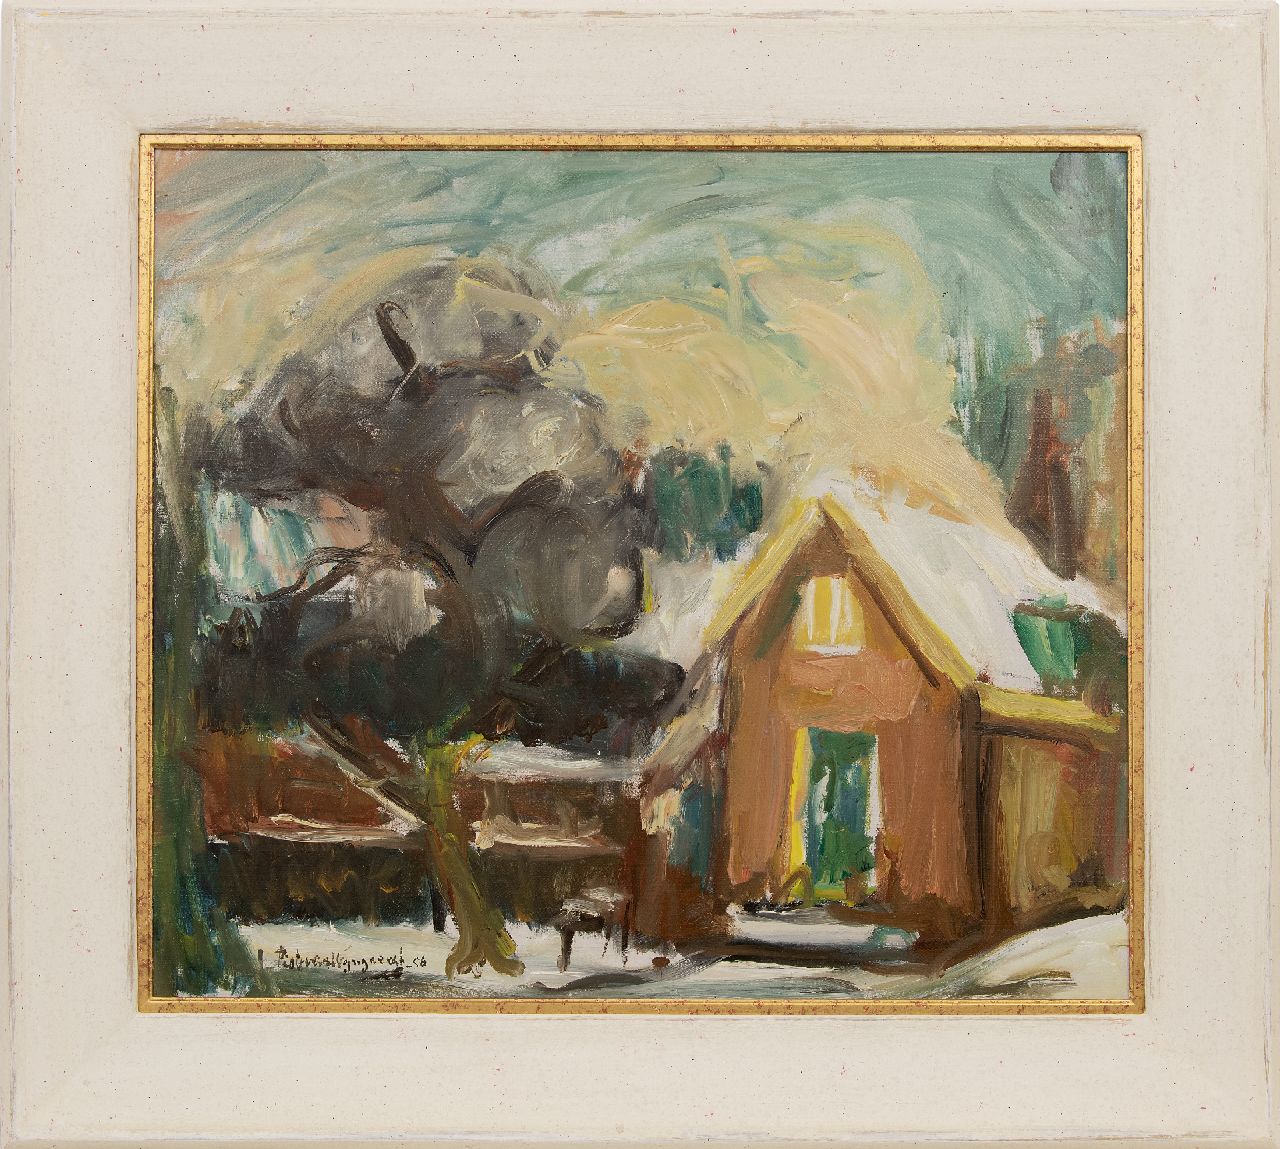 Wijngaerdt P.T. van | Petrus Theodorus 'Piet' van Wijngaerdt | Paintings offered for sale | Winter at Abcoude, oil on canvas 70.5 x 80.3 cm, signed l.l. and dated '56